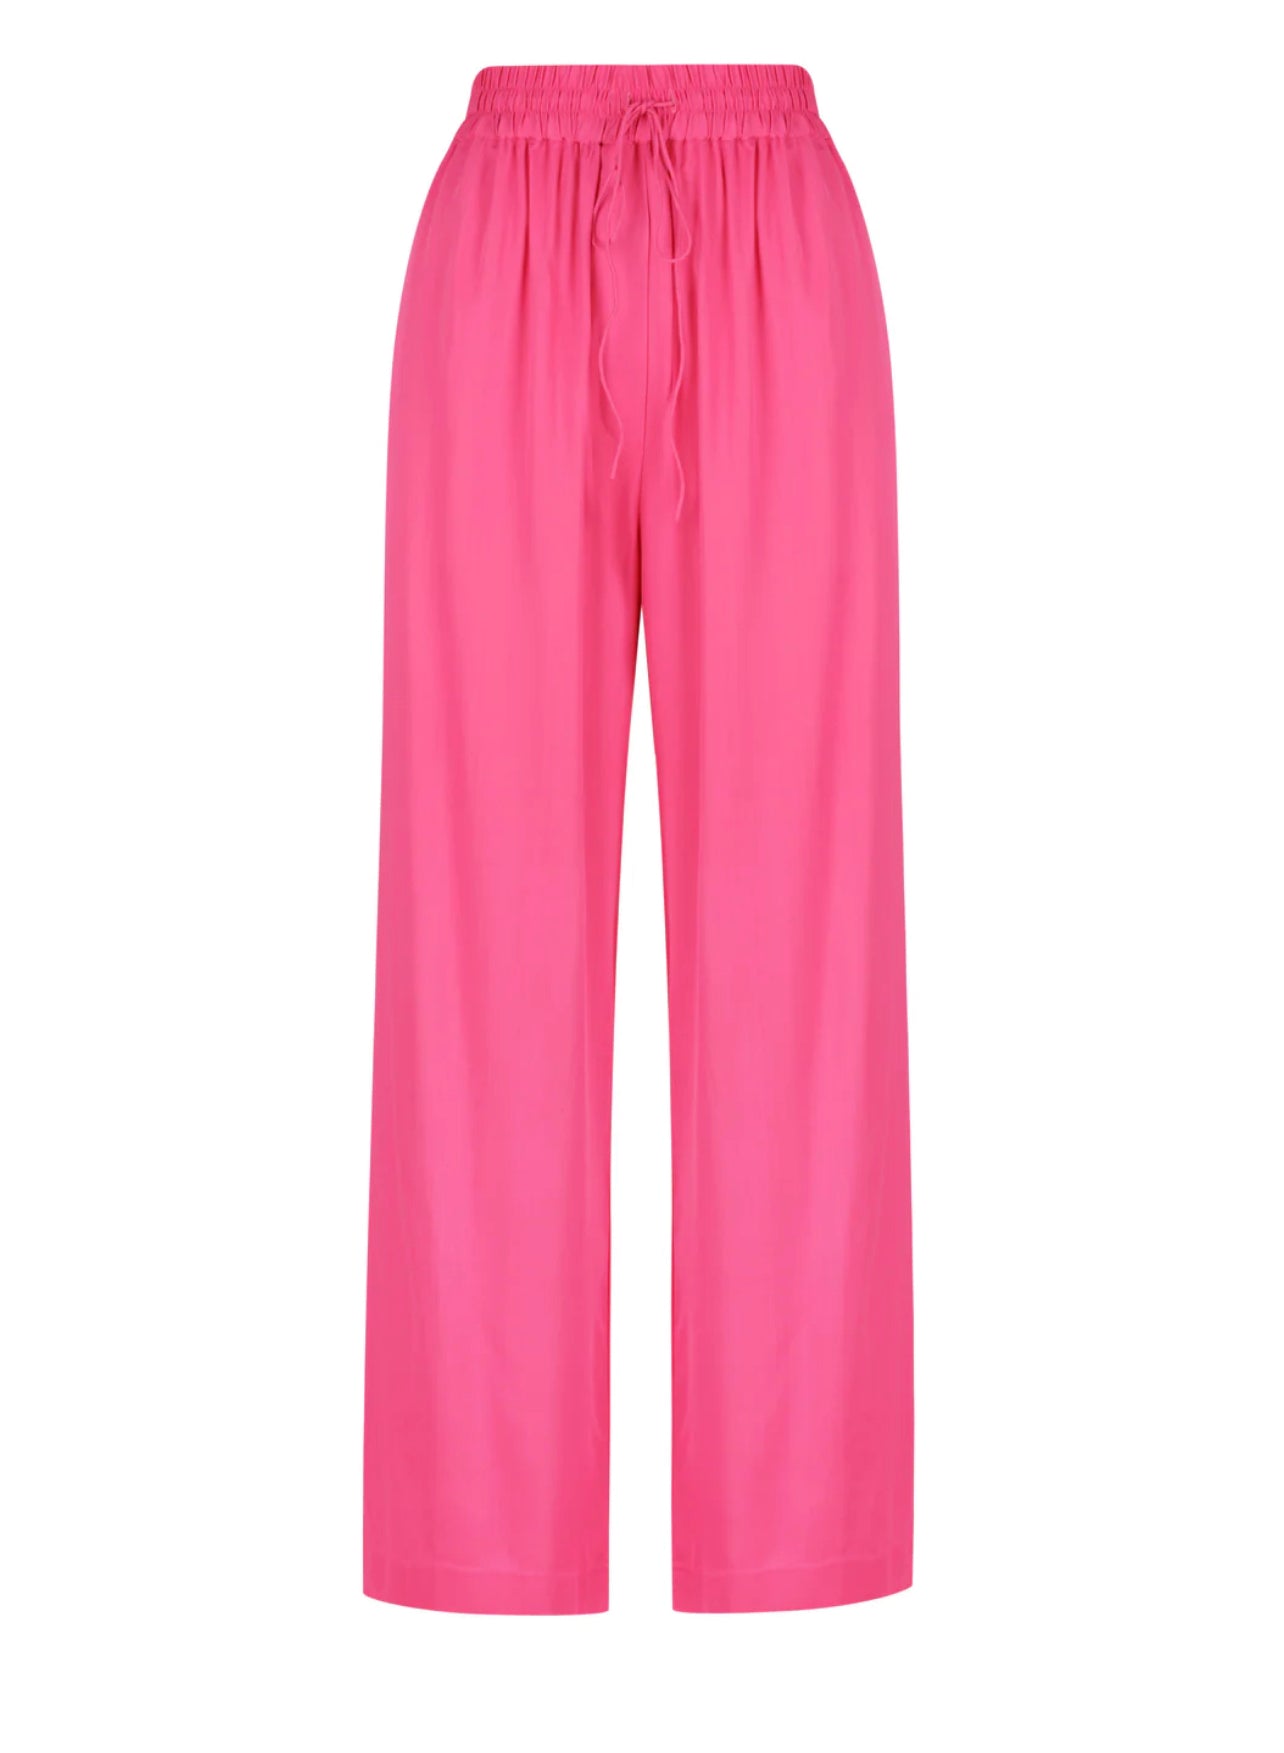 MORRISON - Waverley Pants Pink - Pinkhill, Darwin boutique, Australian high end fashion, Darwin Fashion